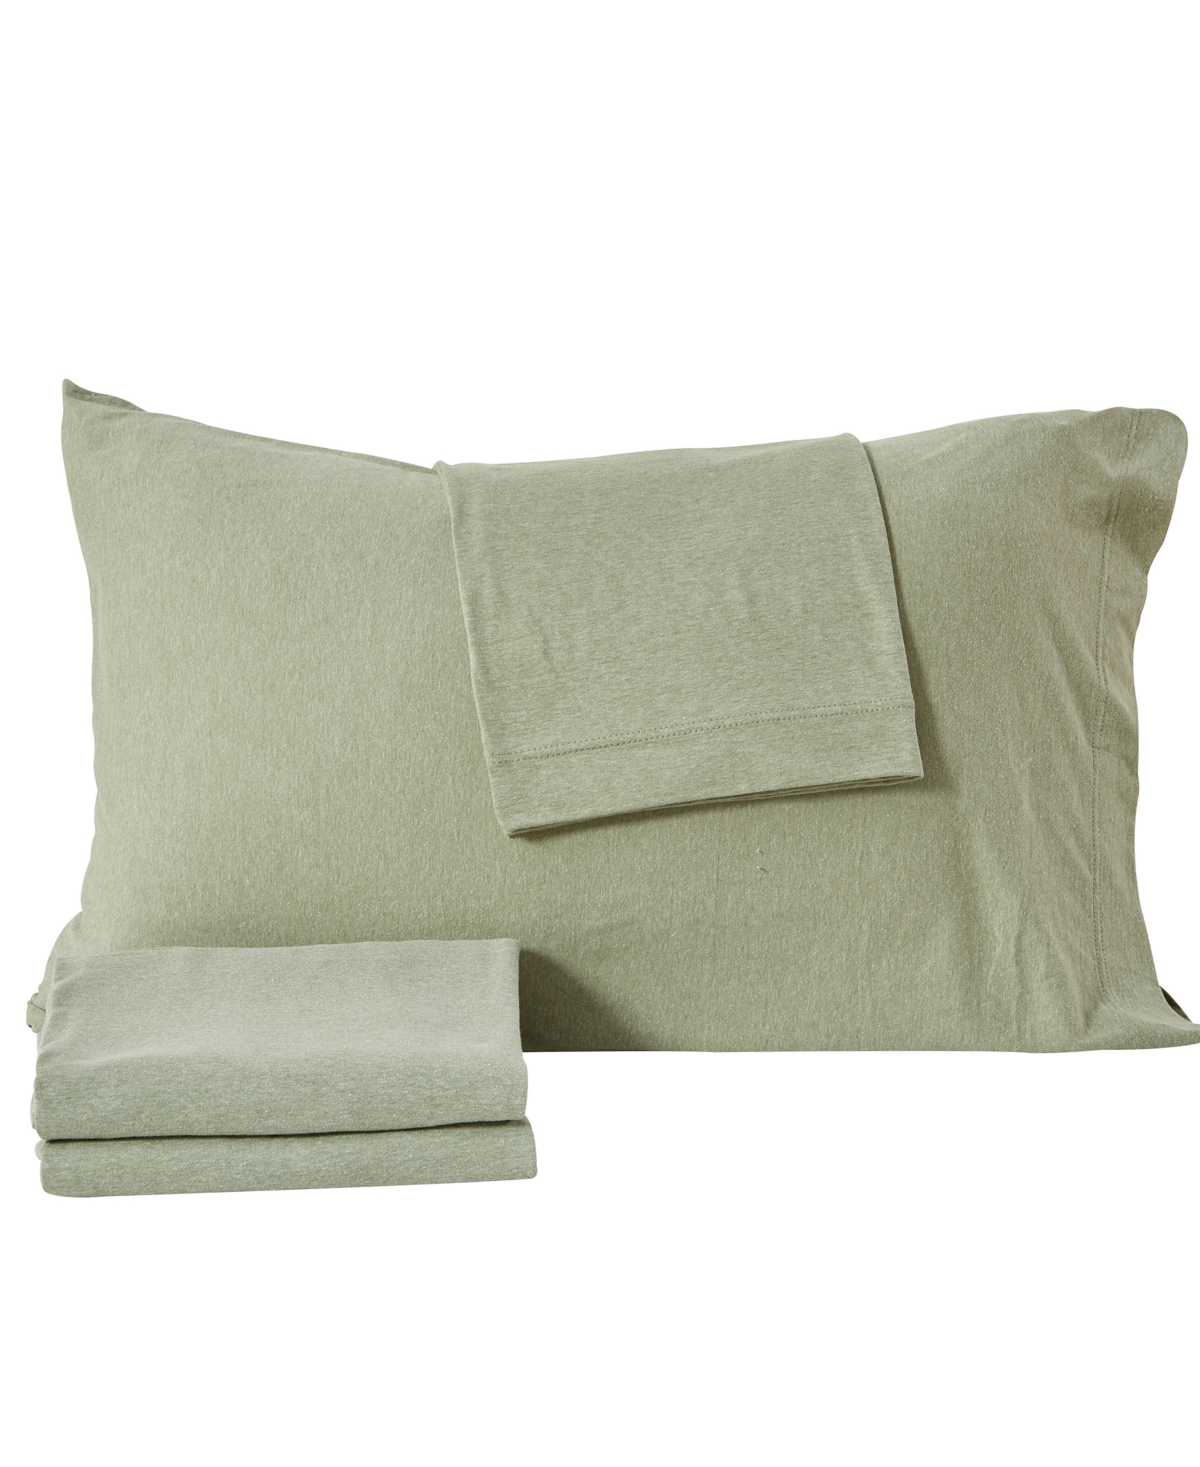 Premium Comforts Heathered Melange T-shirt Jersey Knit Cotton Blend 4 Piece Sheet Set, Queen In Heathered Eucalyptus